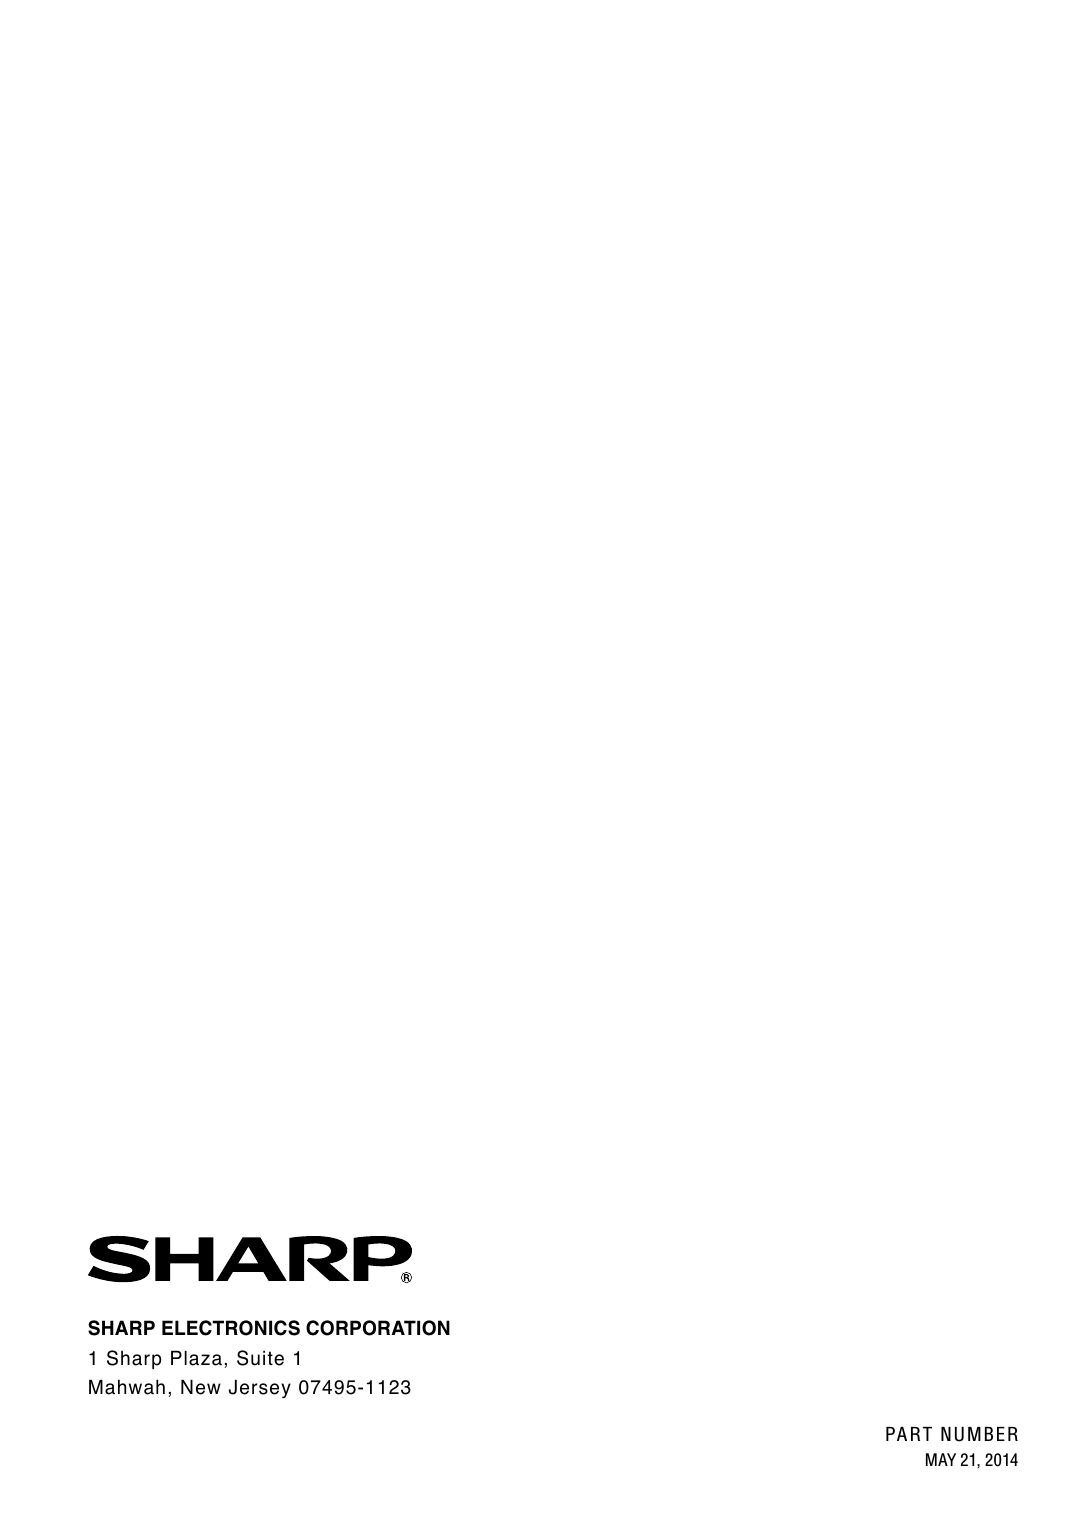 PART NUMBERMAy 21, 2014SHARP ELECTRONICS CORPORATION1 Sharp Plaza, Suite 1 Mahwah, New Jersey 07495-1123